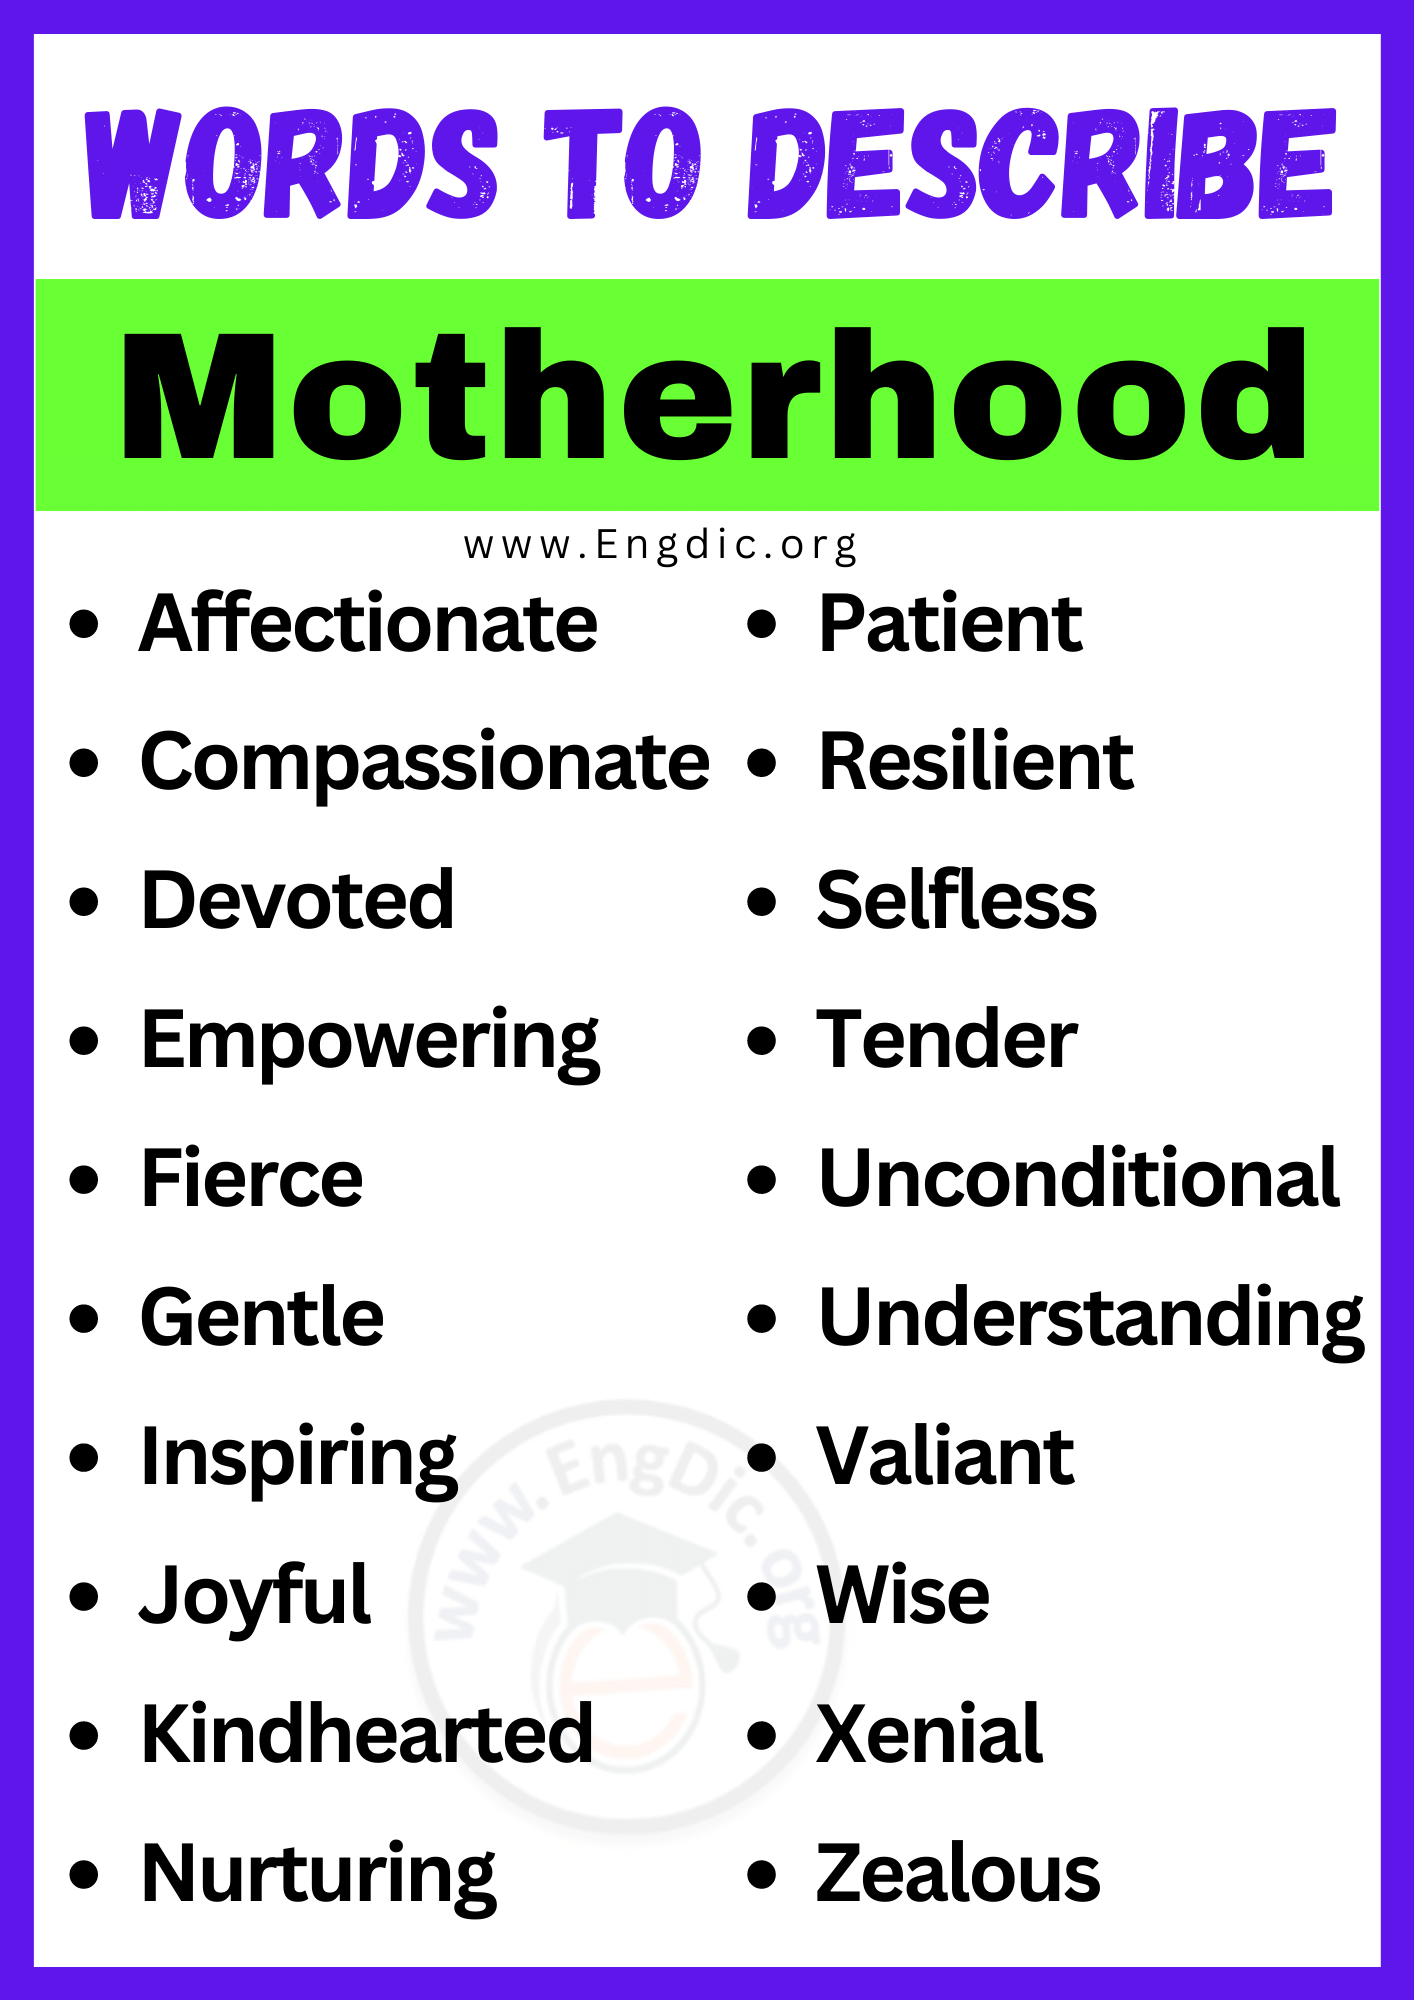 Words to Describe Motherhood